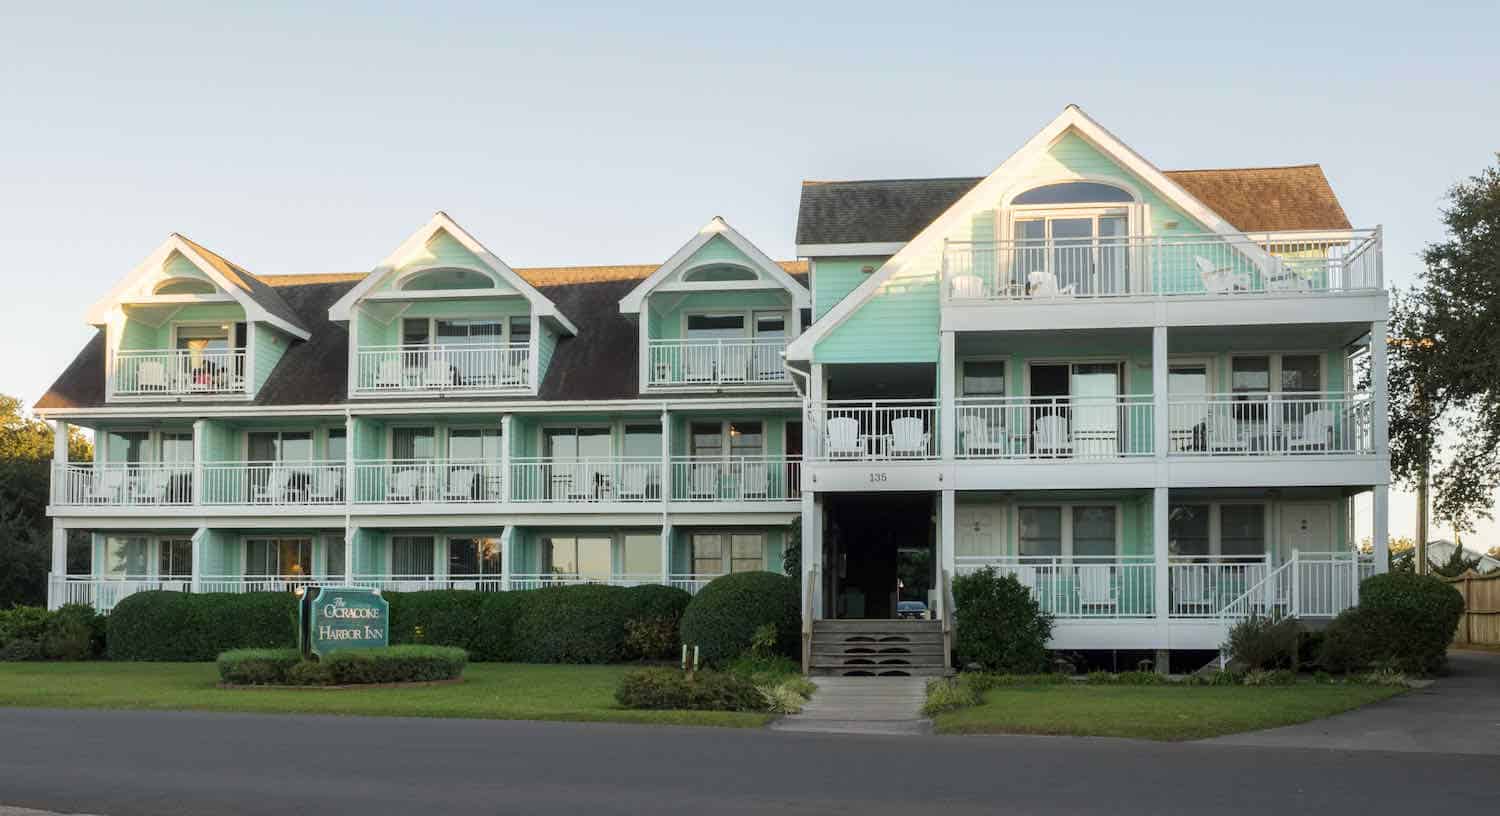 The green and white building of Ocracoke Harbor Inn.